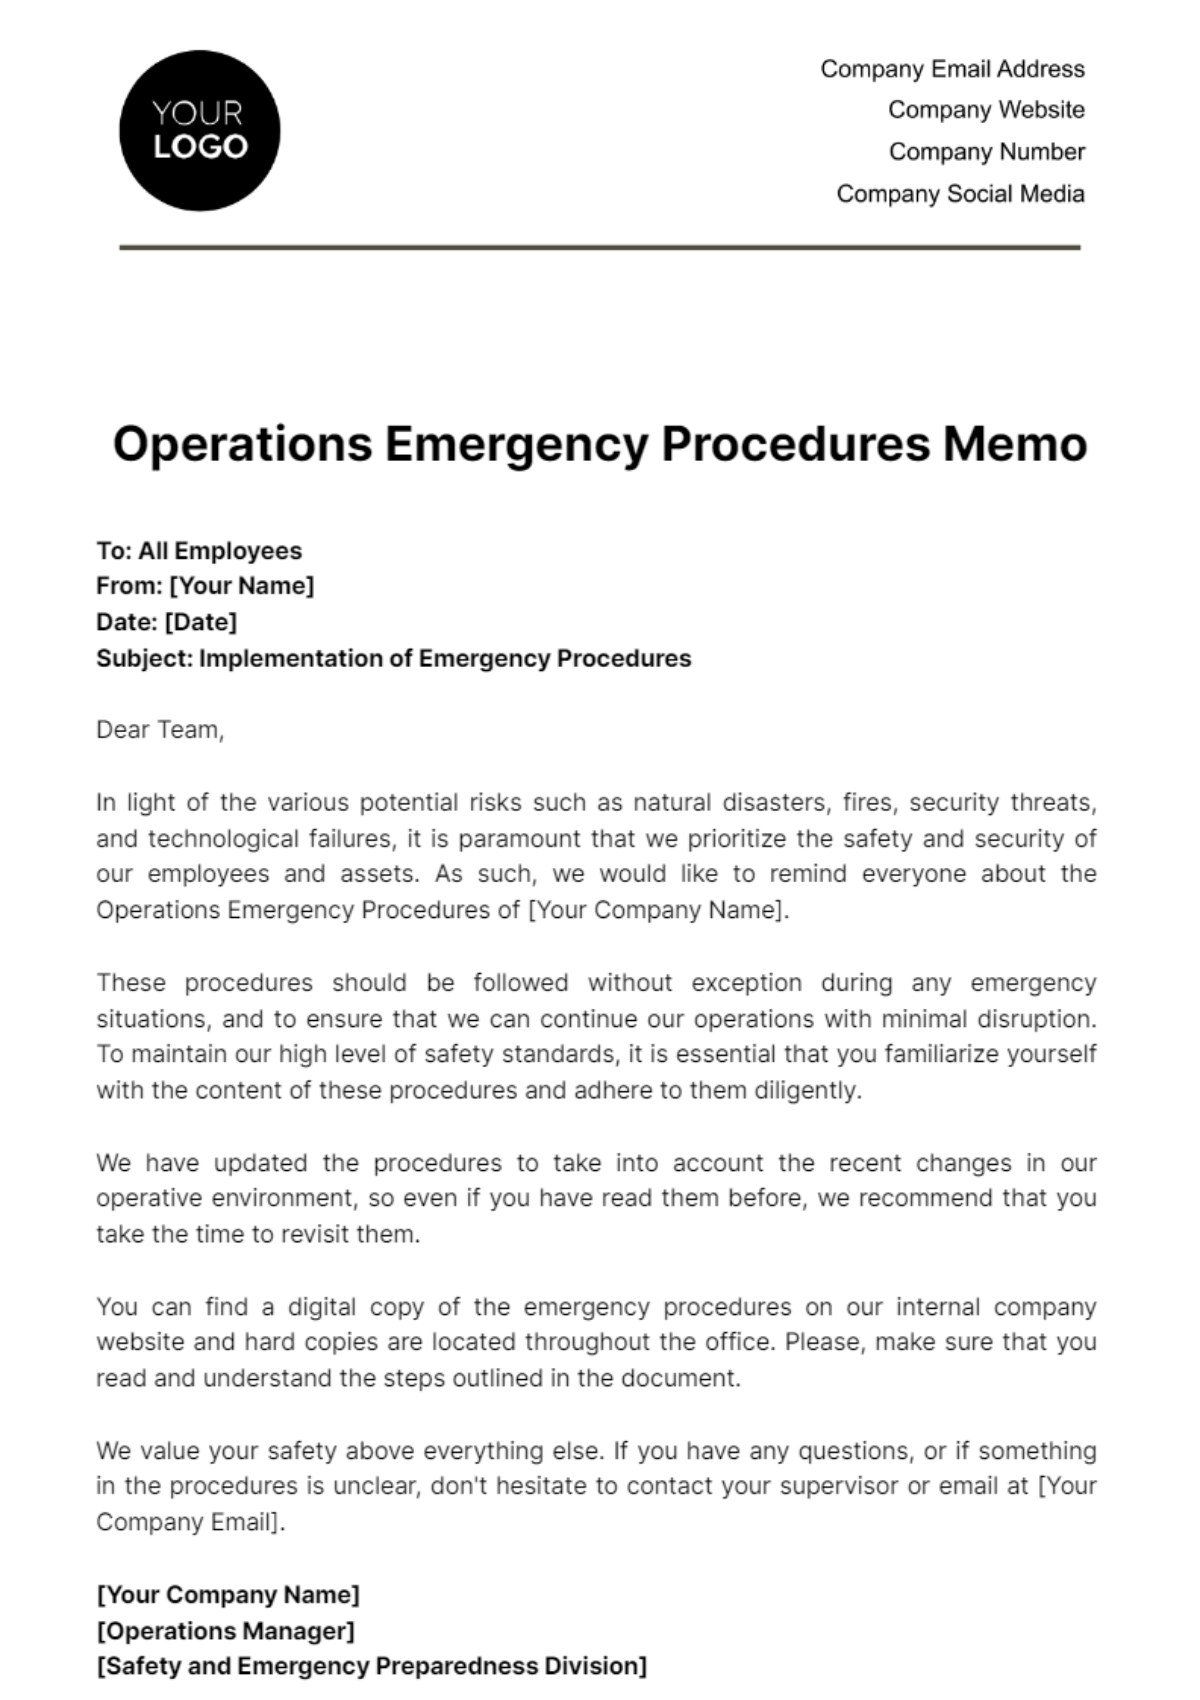 Operations Emergency Procedures Memo Template